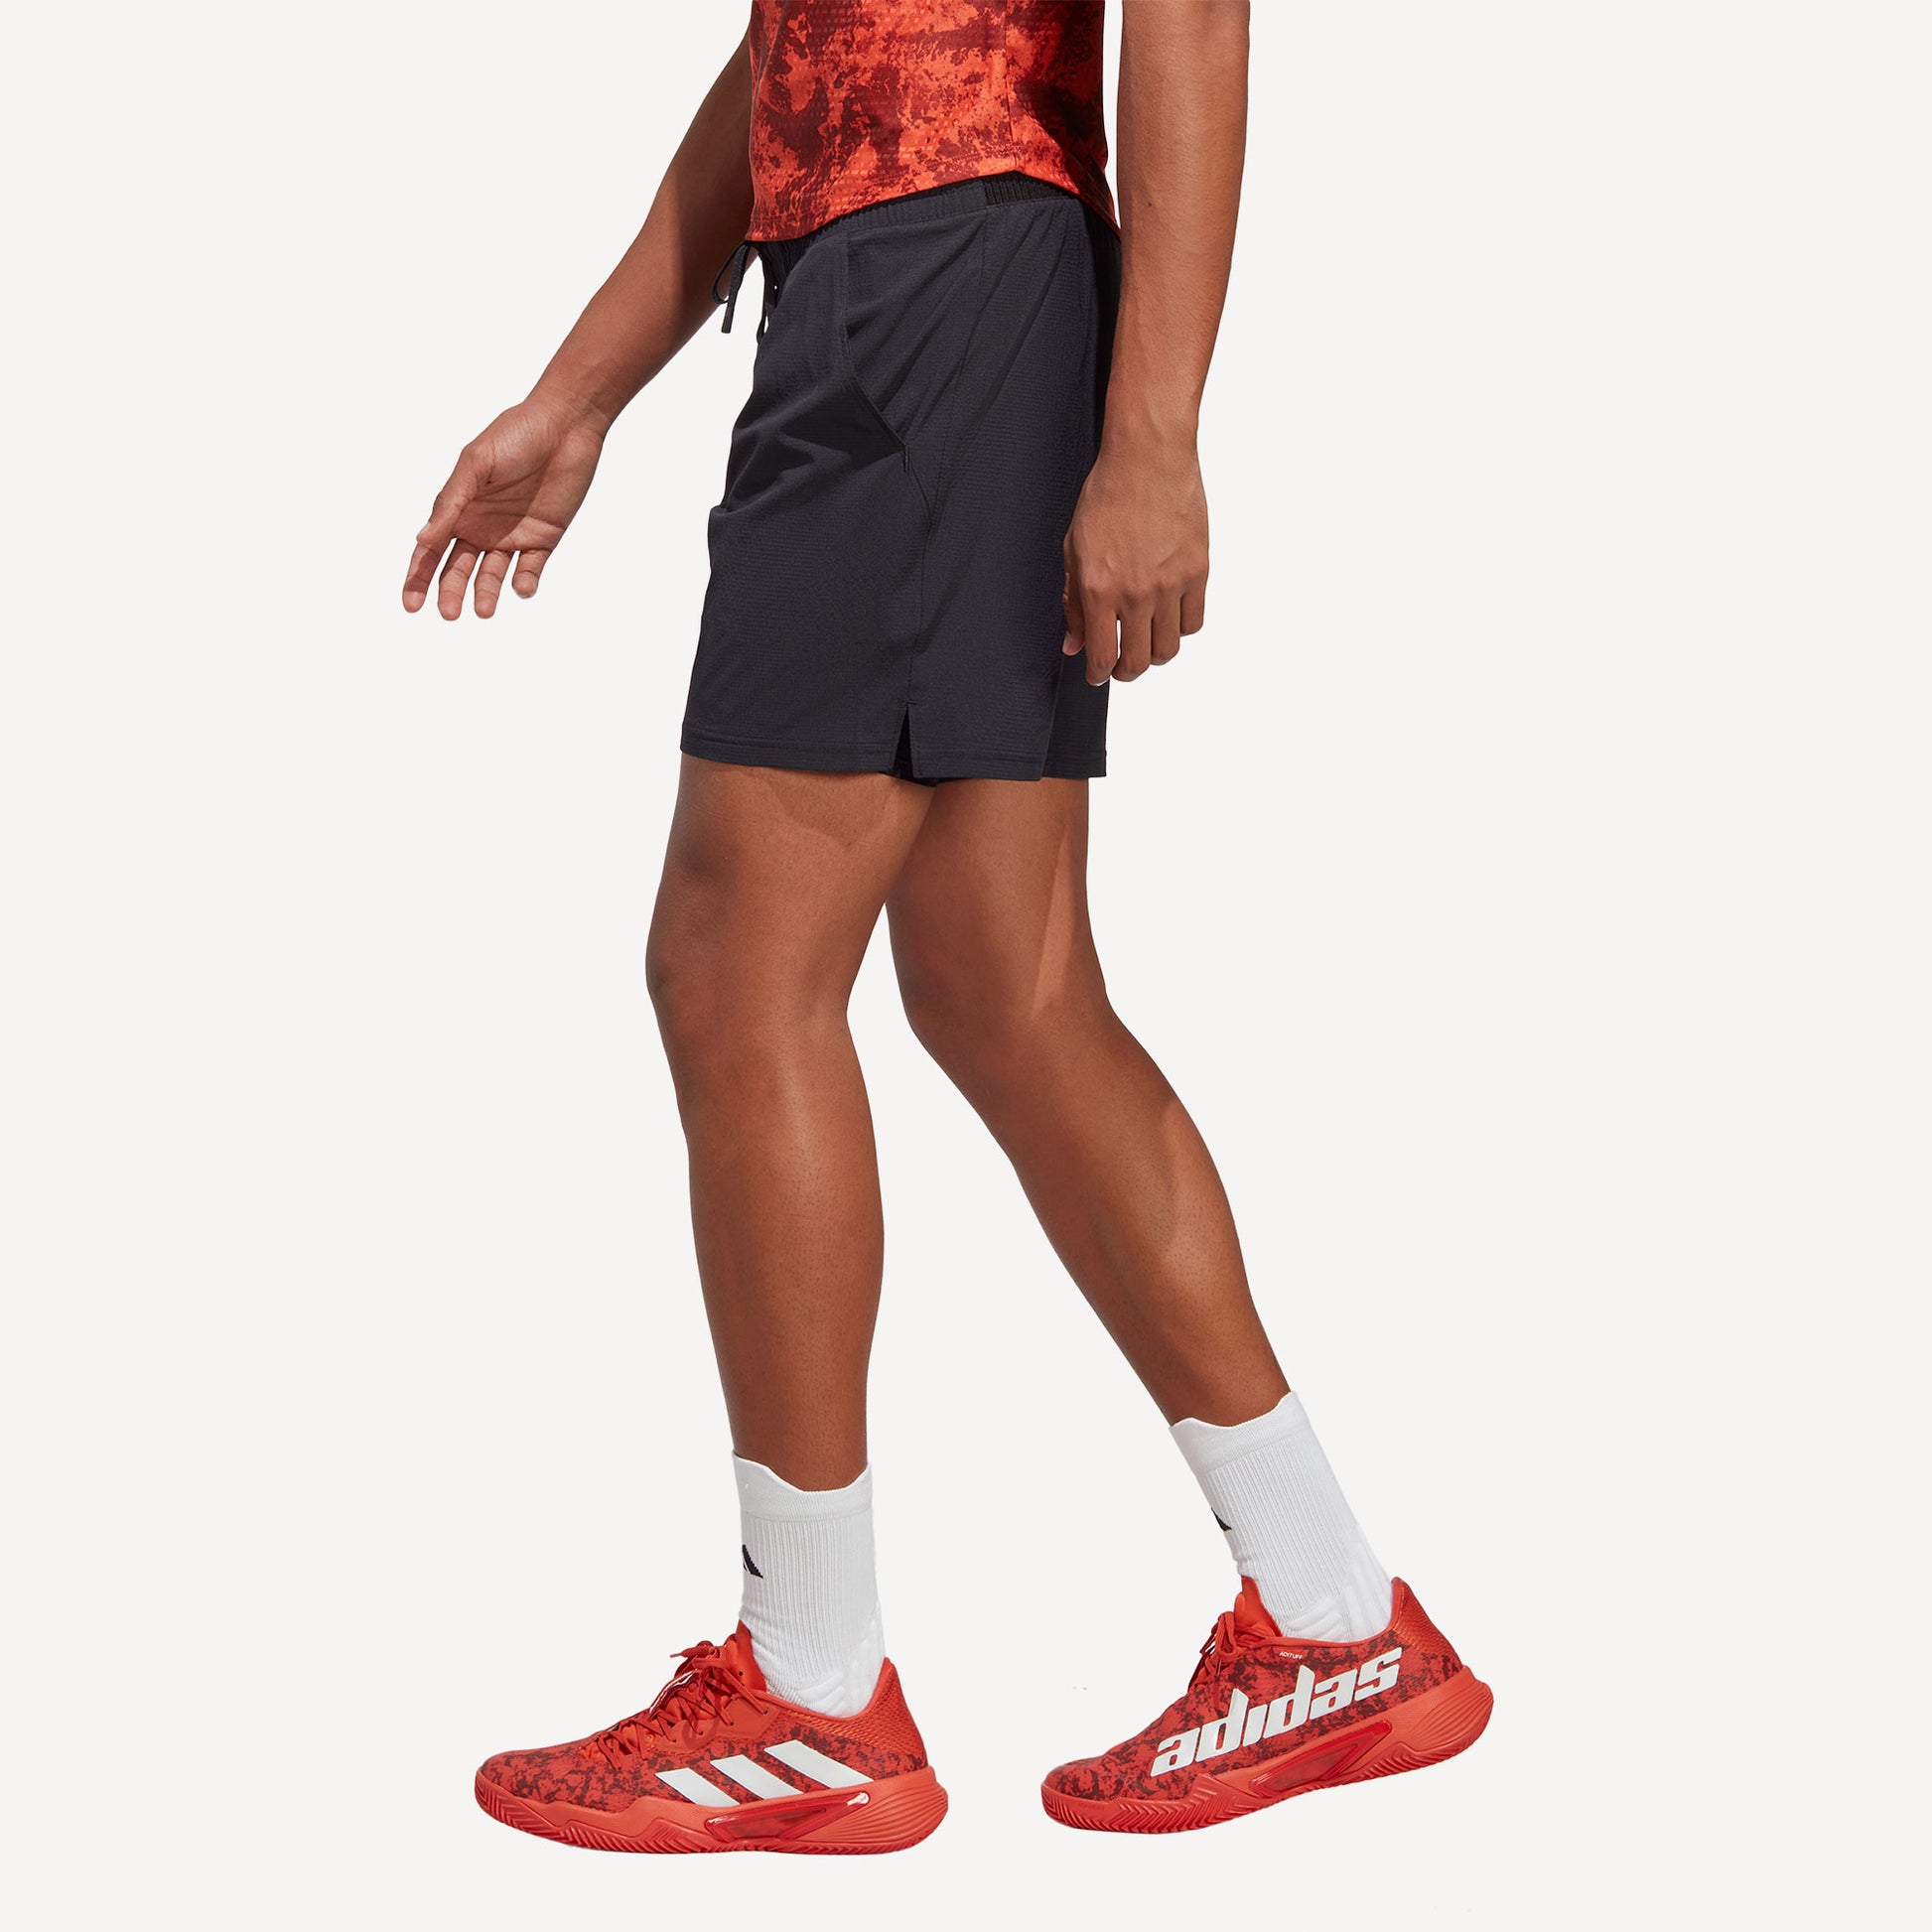 adidas Ergo Men's 9-Inch Tennis Shorts Black (3)